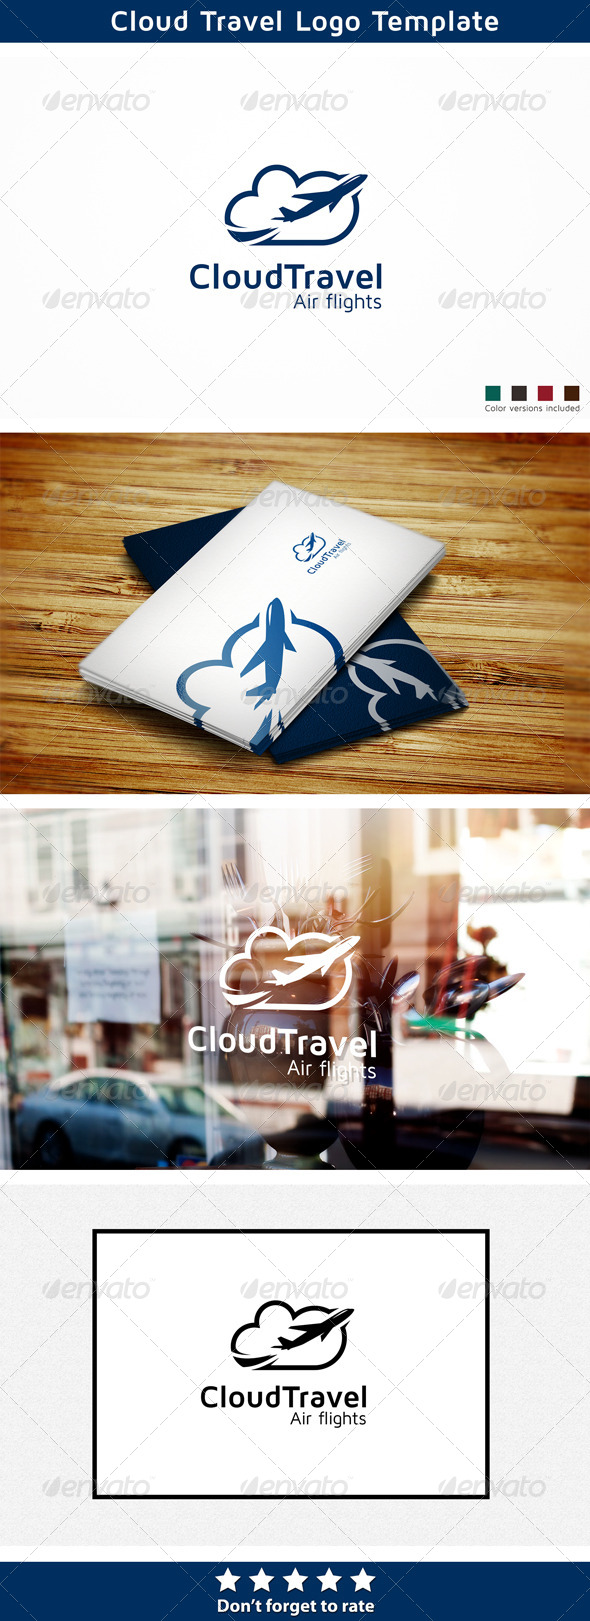 Cloud Travel